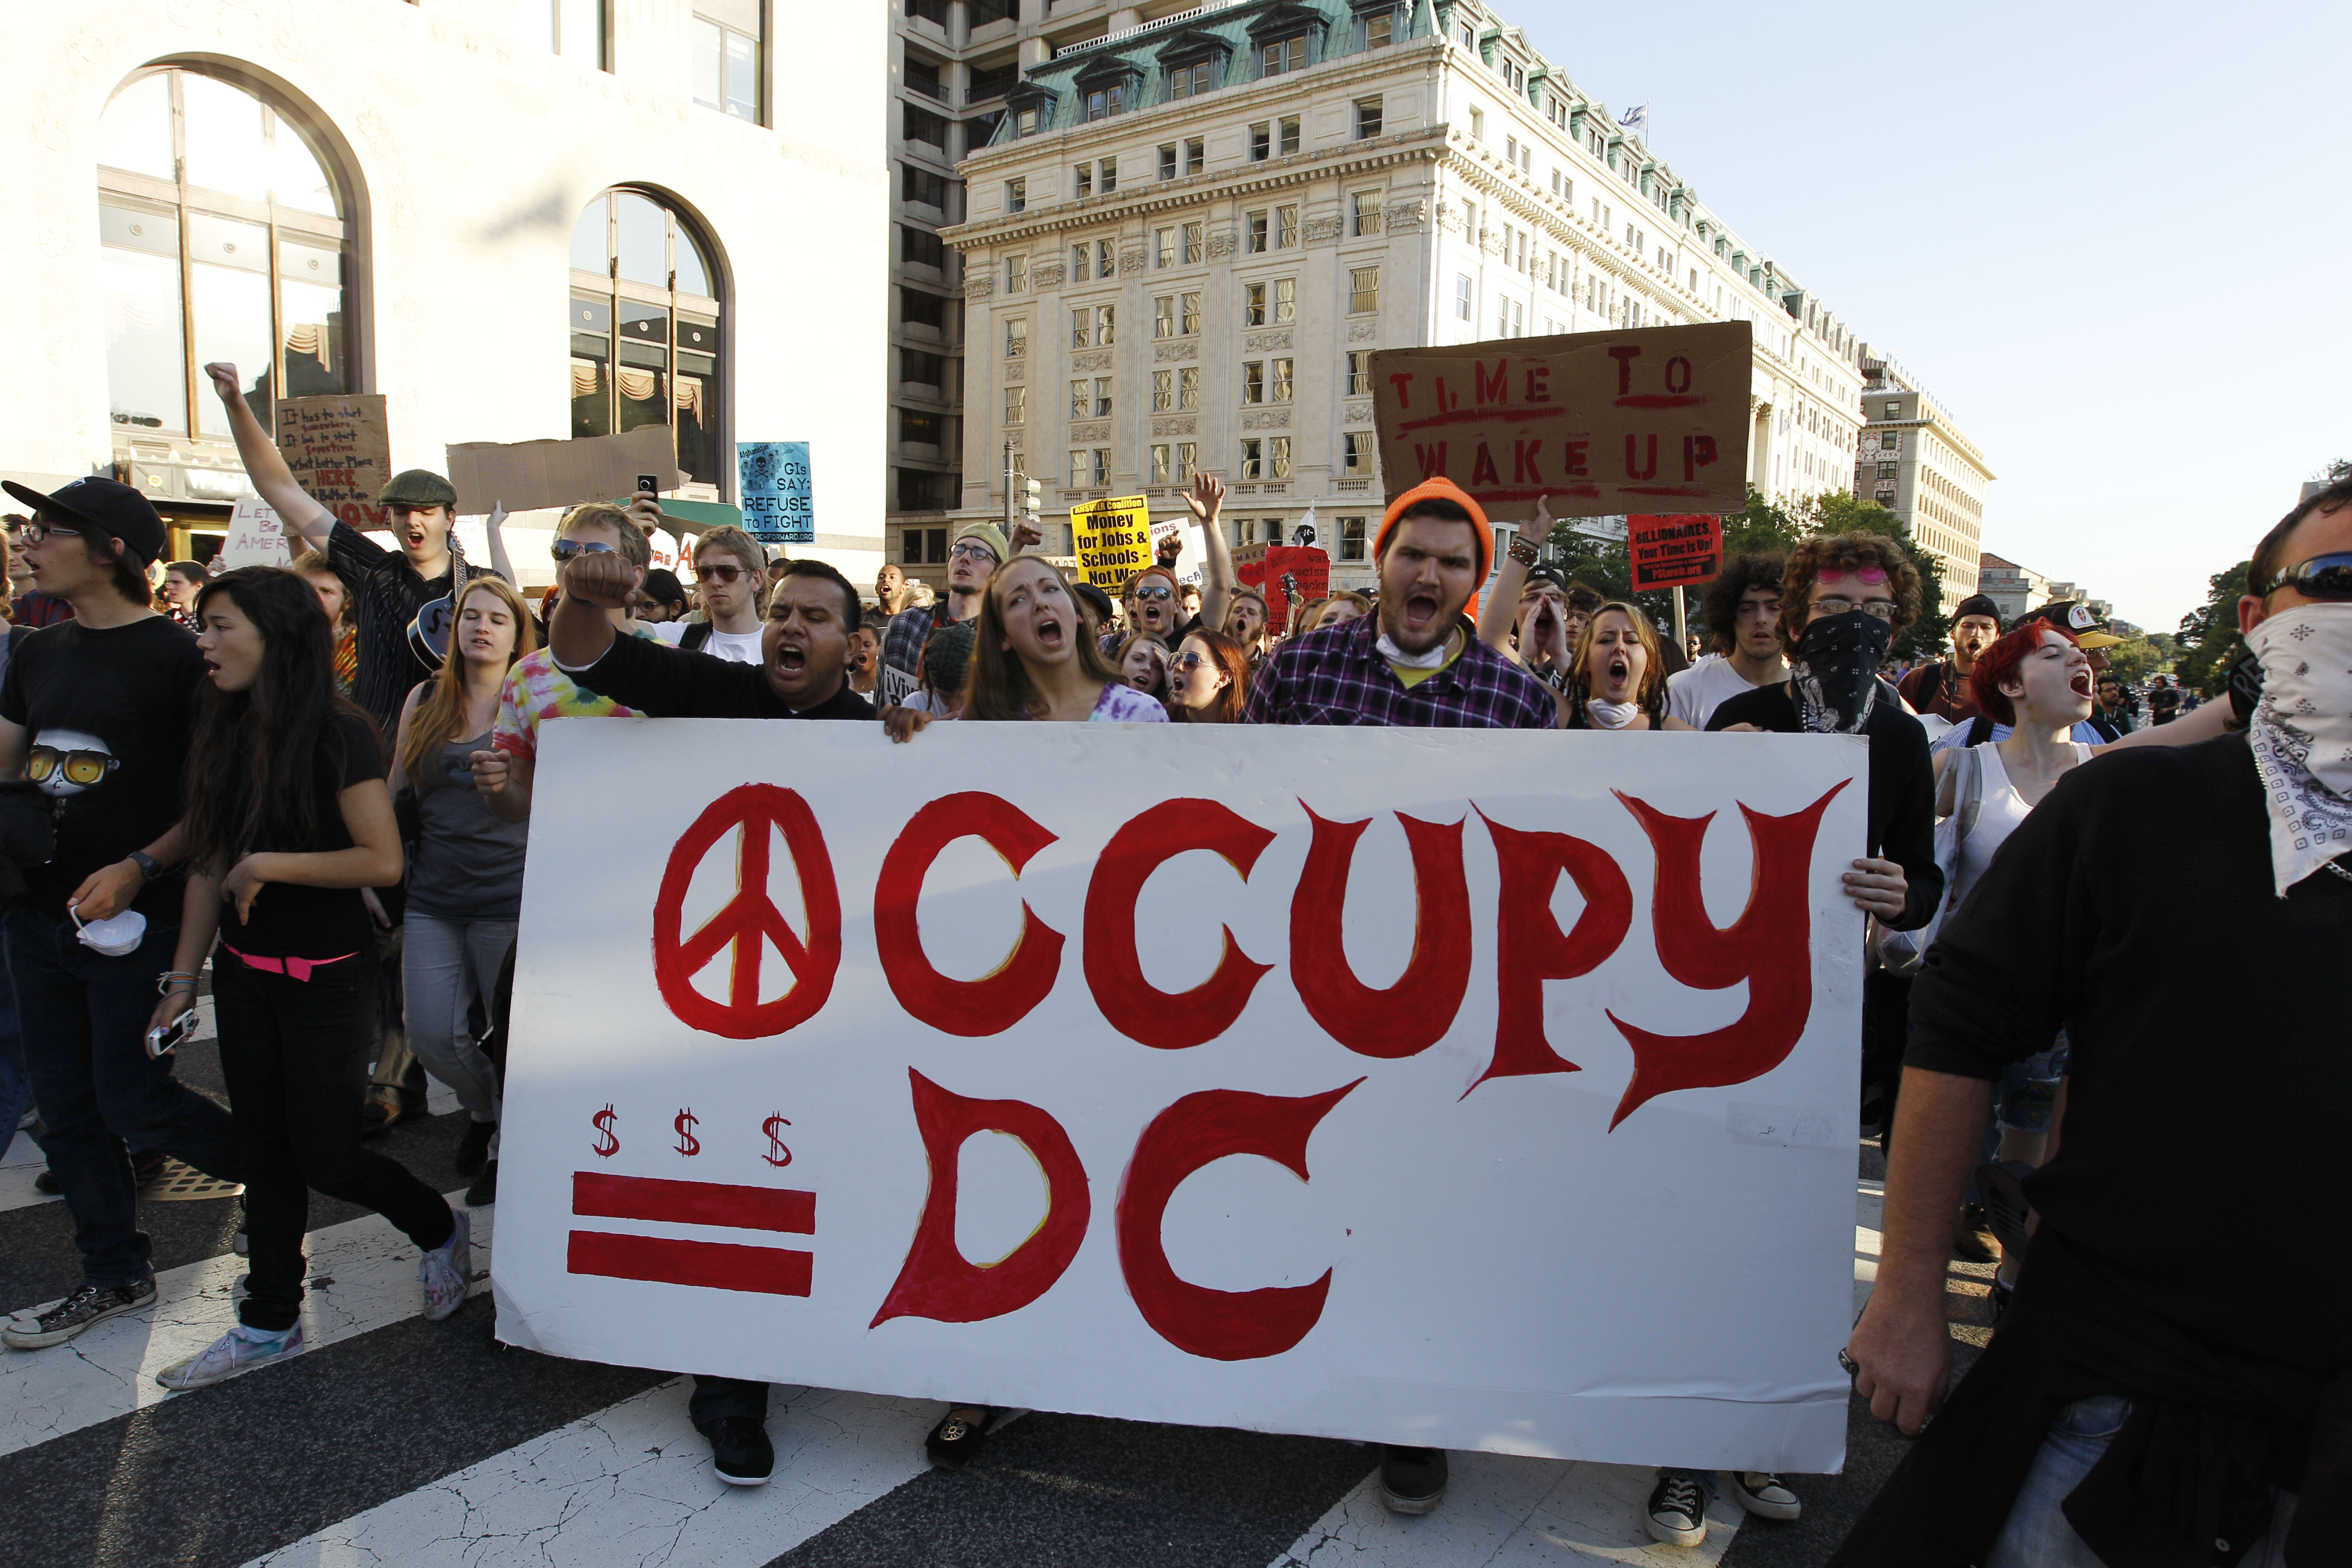 Occupy Stockholm, Nordisk Ungdom, Facebook, Jesper Nilsson, Occupy Wall Street, Nazism